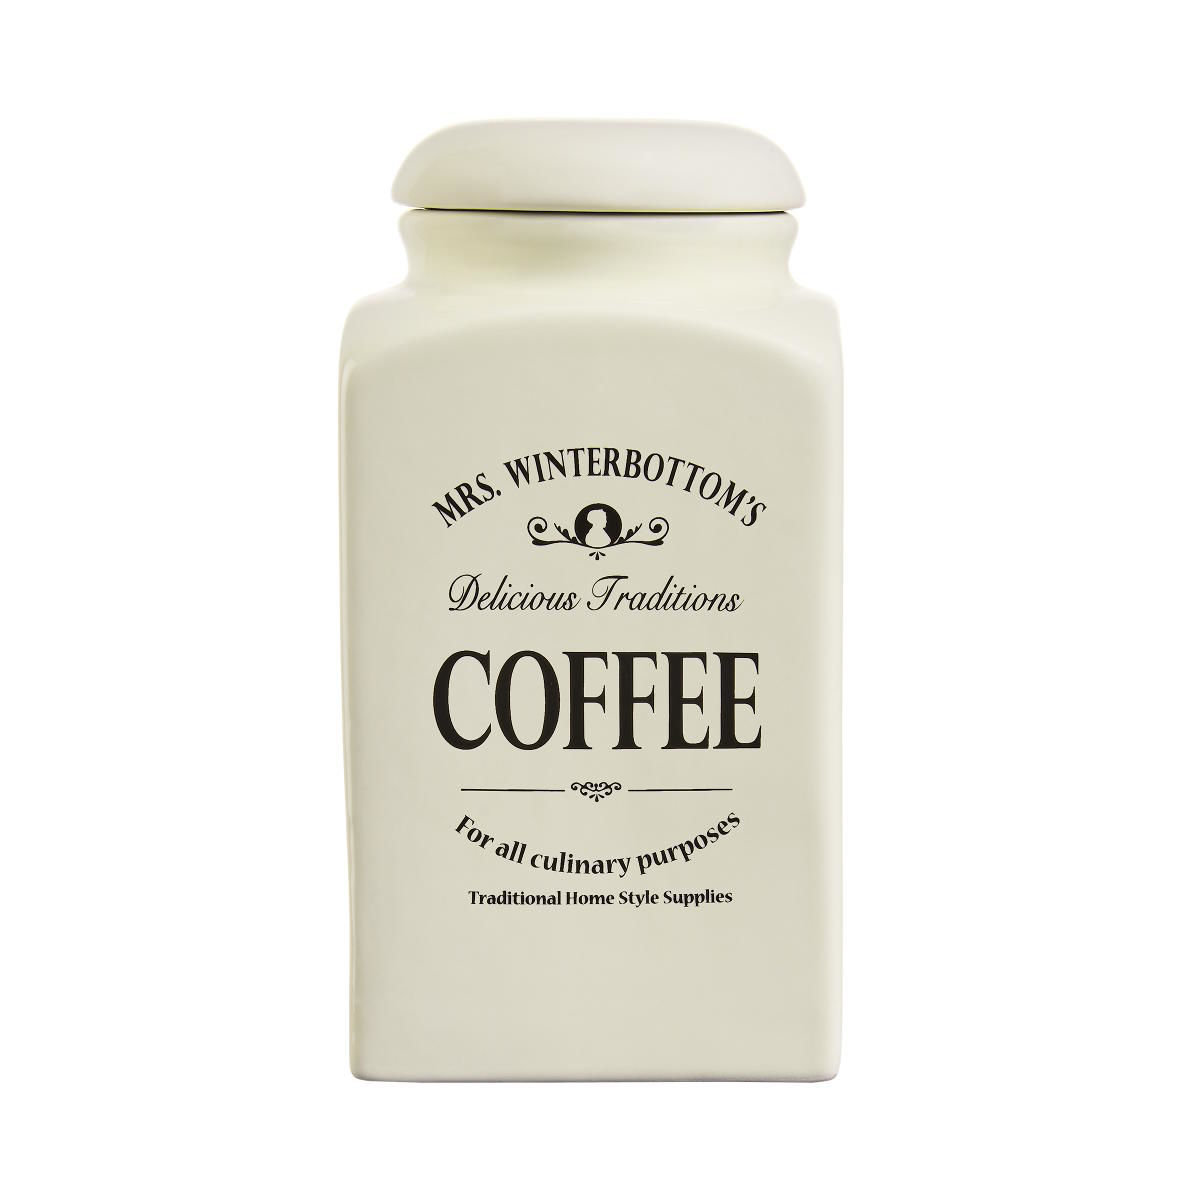 mrs winterbottom tea coffee sugar